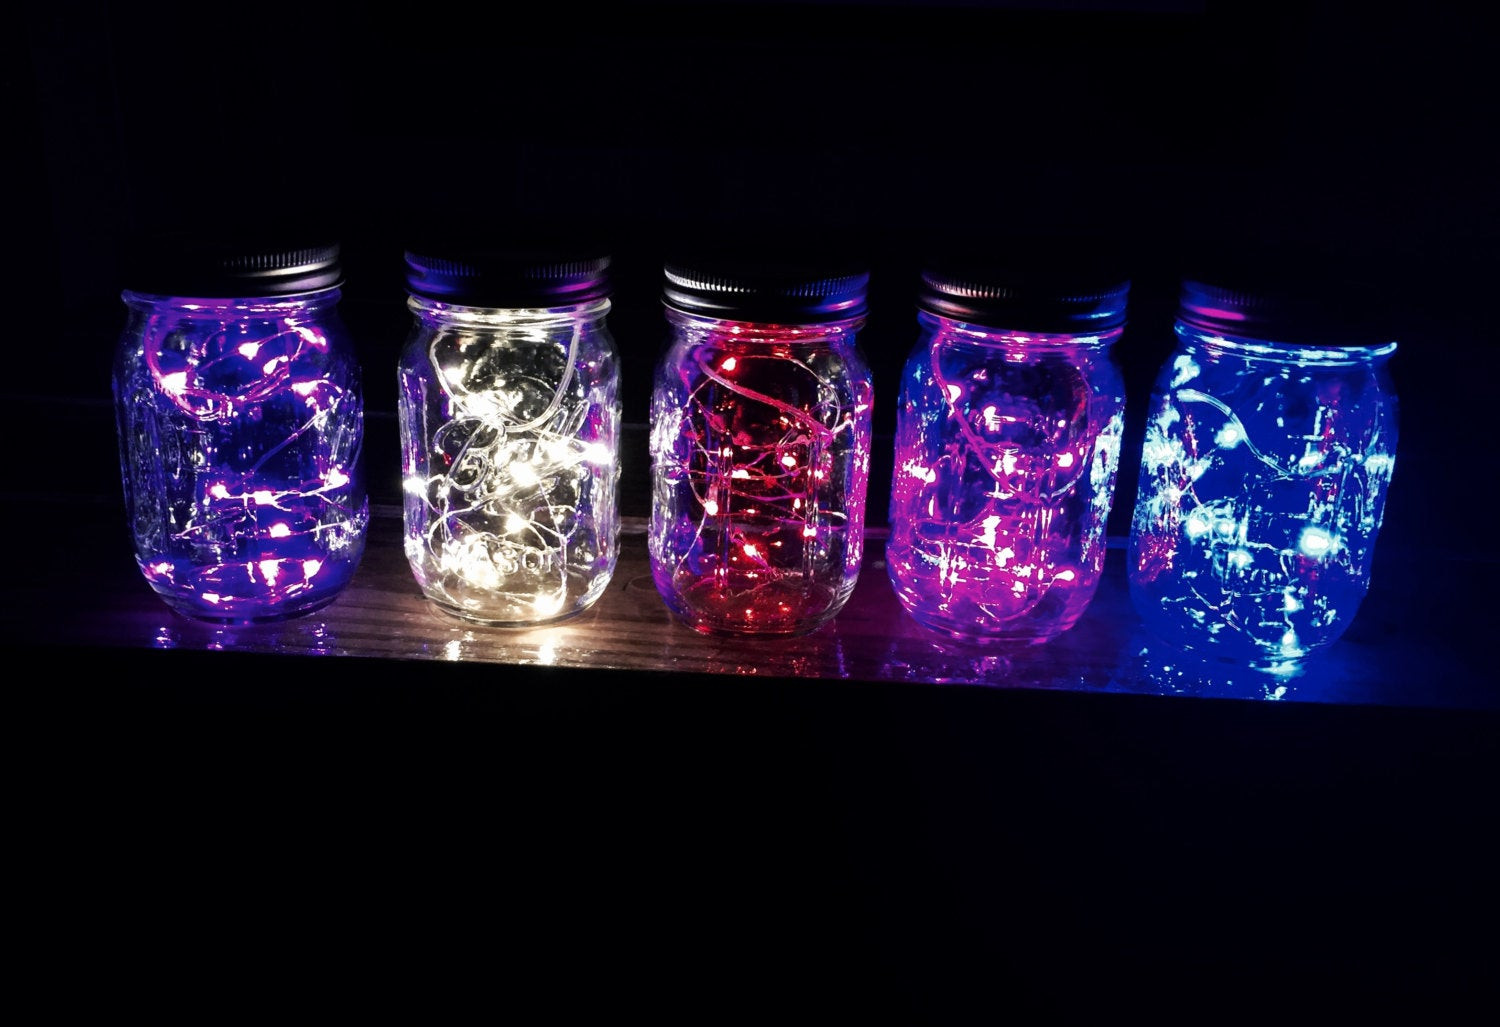 Best ideas about Mason Jar Fairy Lights DIY
. Save or Pin DIY Fairy Lights Mason Jar Now.